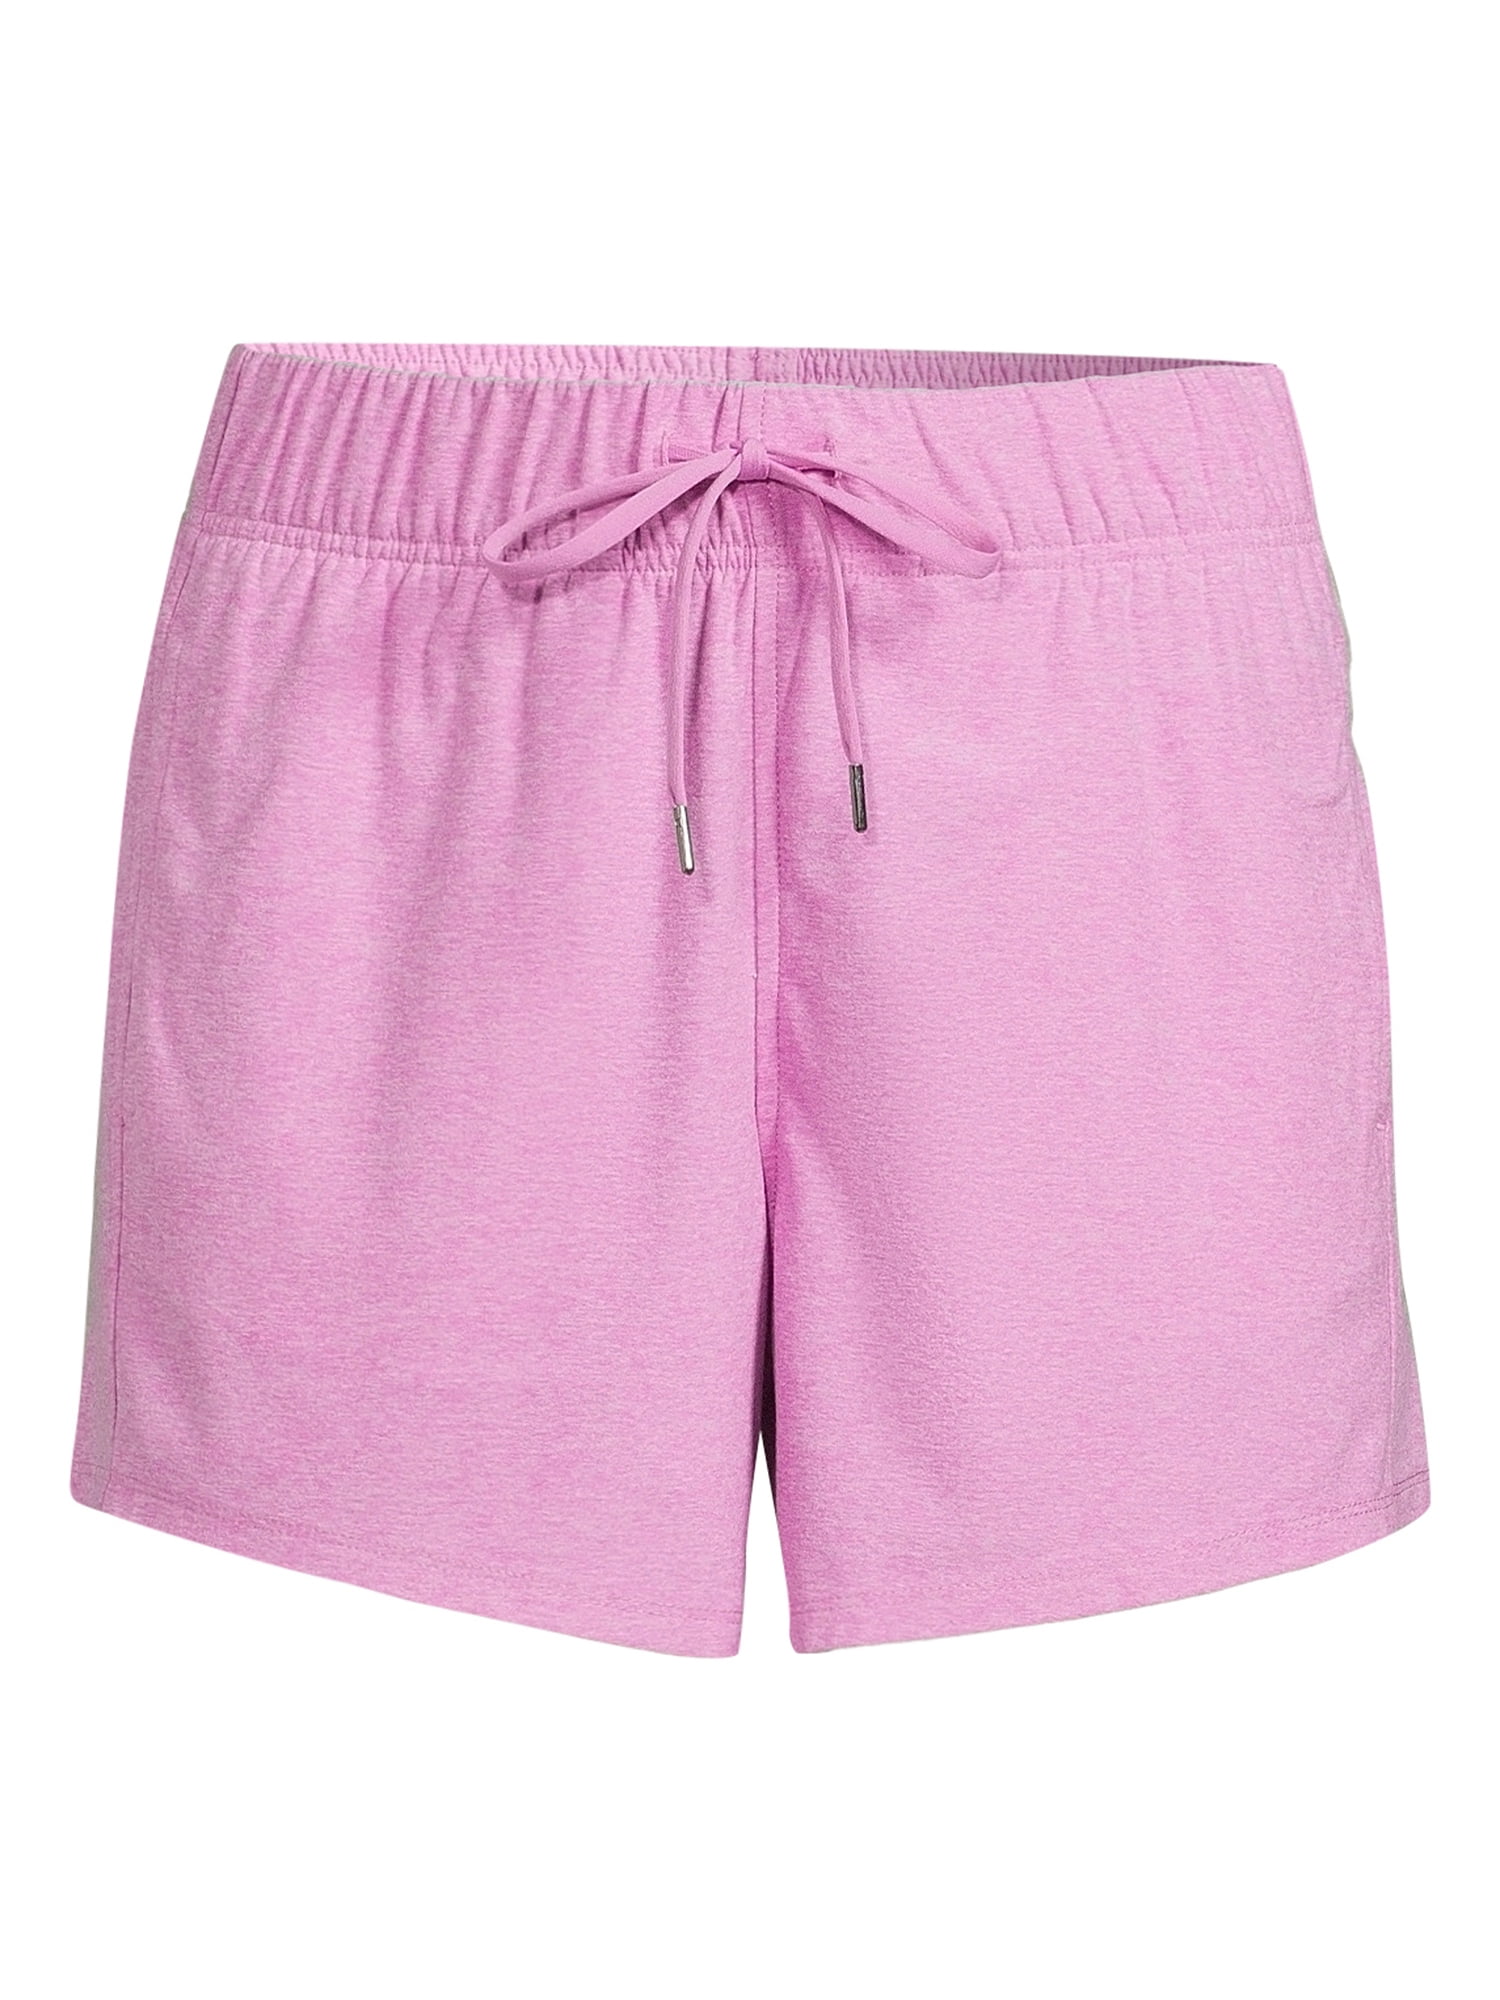 freely, Shorts, Light Pink Freely Academy Outdoors Nikki Athletic Shorts  Euc Sports Bottoms